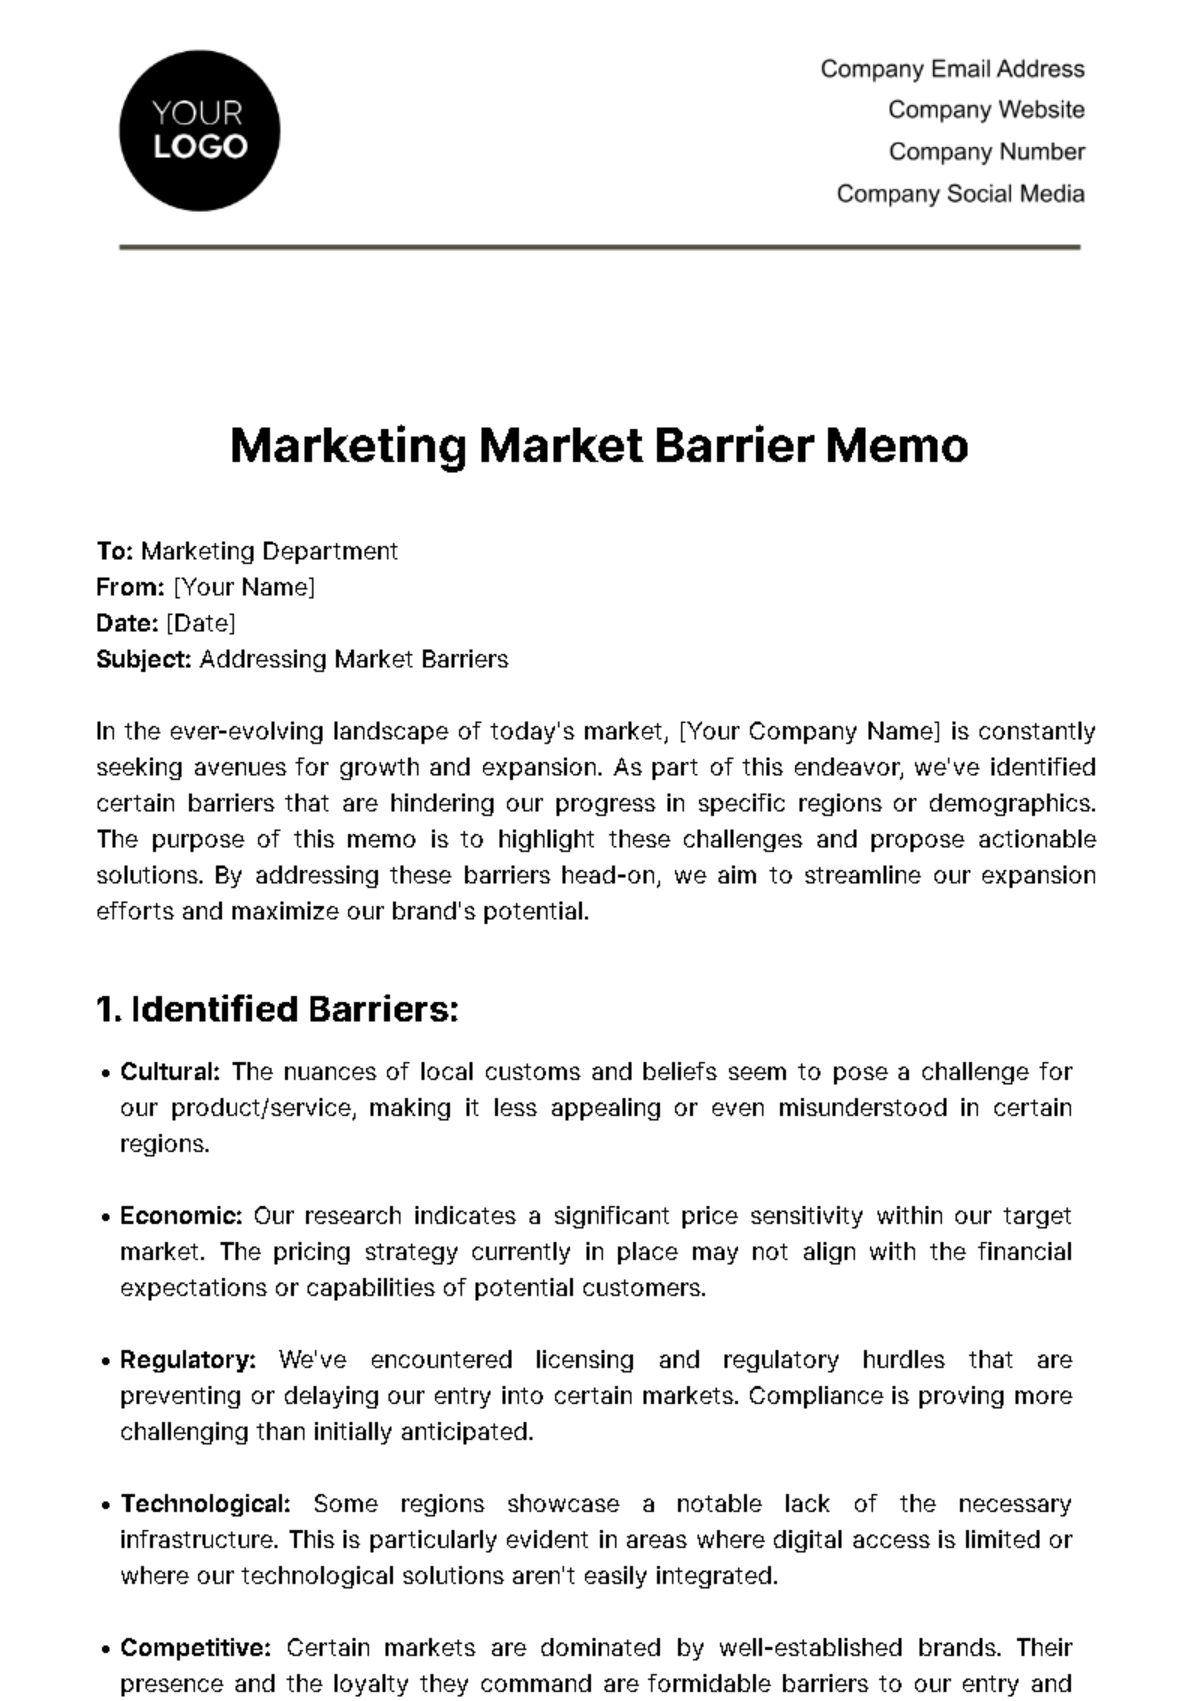 Free Marketing Market Barrier Memo Template